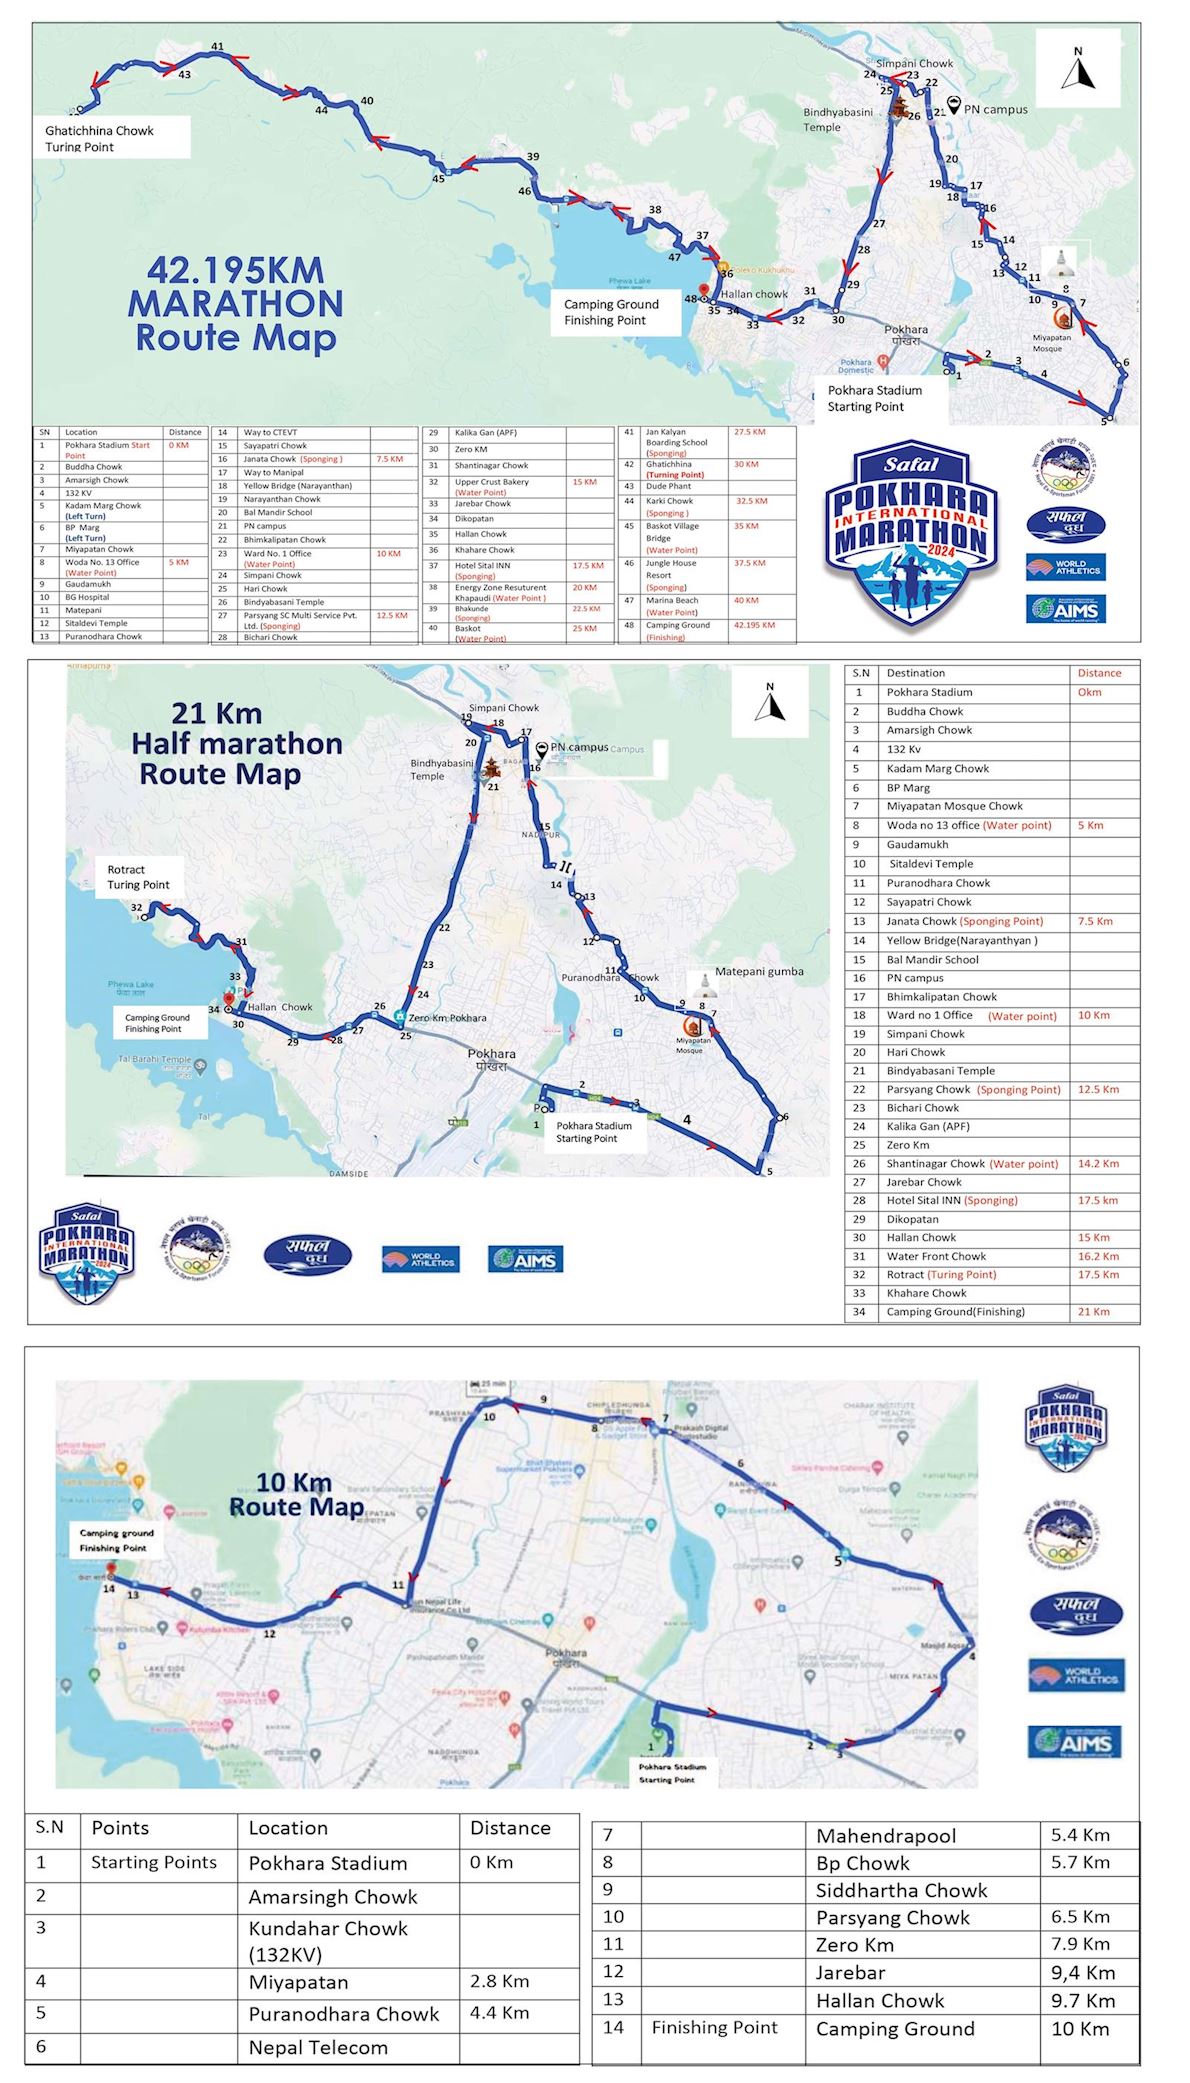 Pokhara International Marathon Route Map